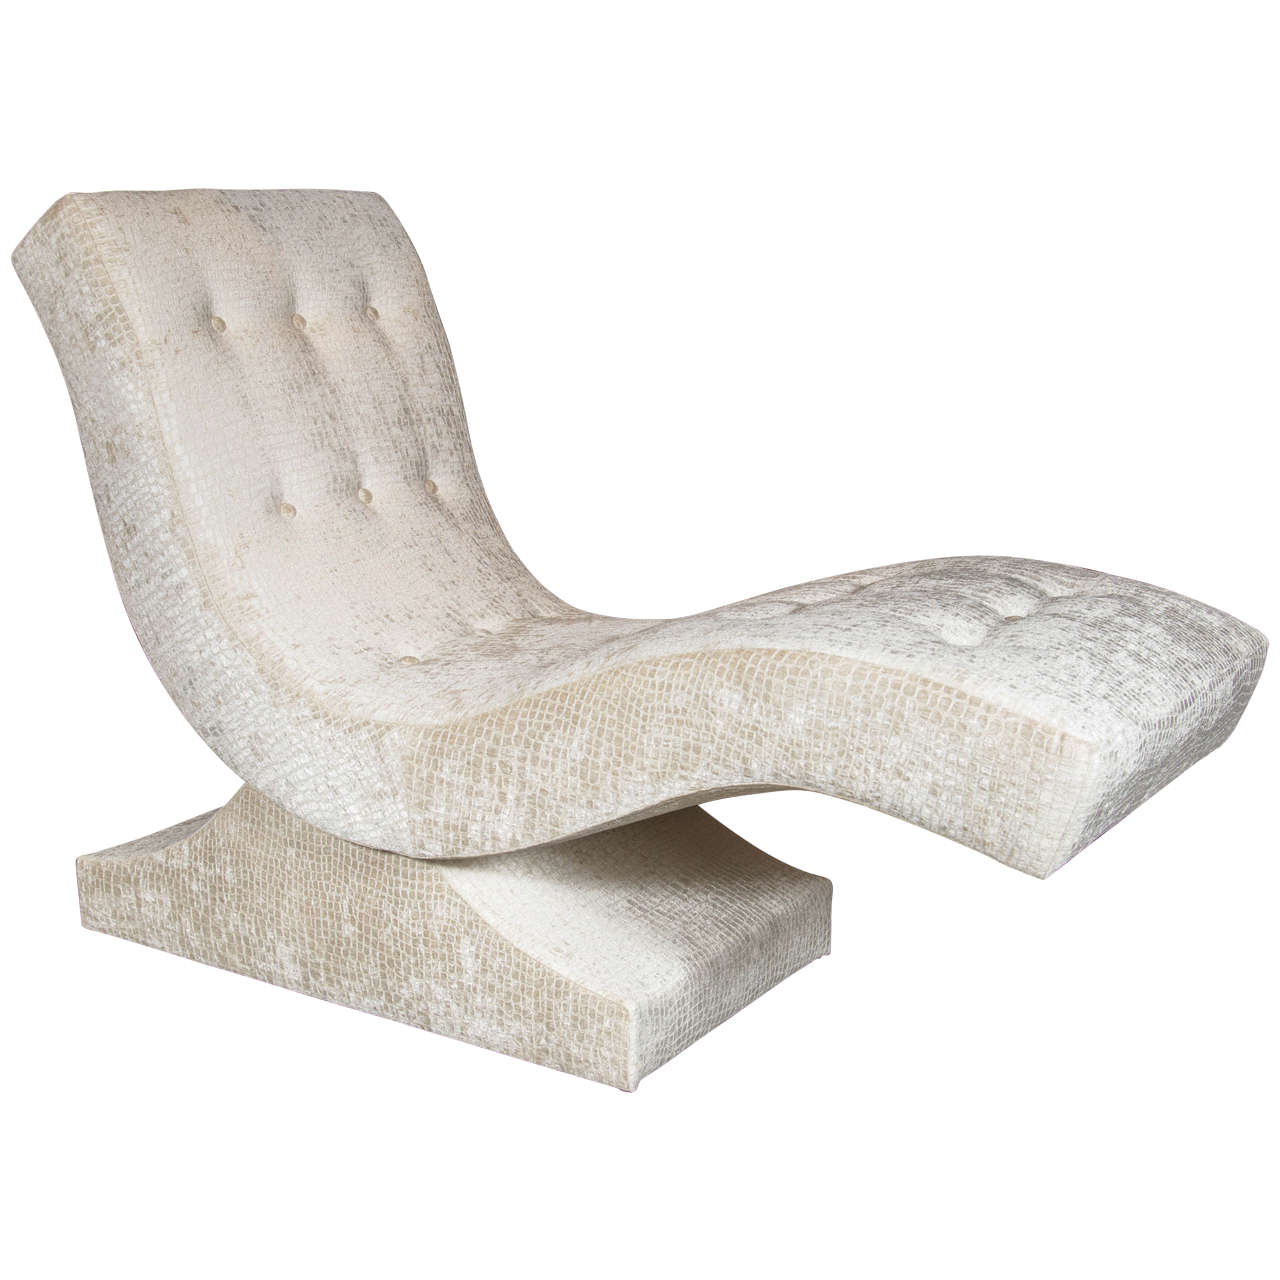 Mid-Century Modernist Sculptural Chaise in Gauffraged Croc Velvet Upholstery